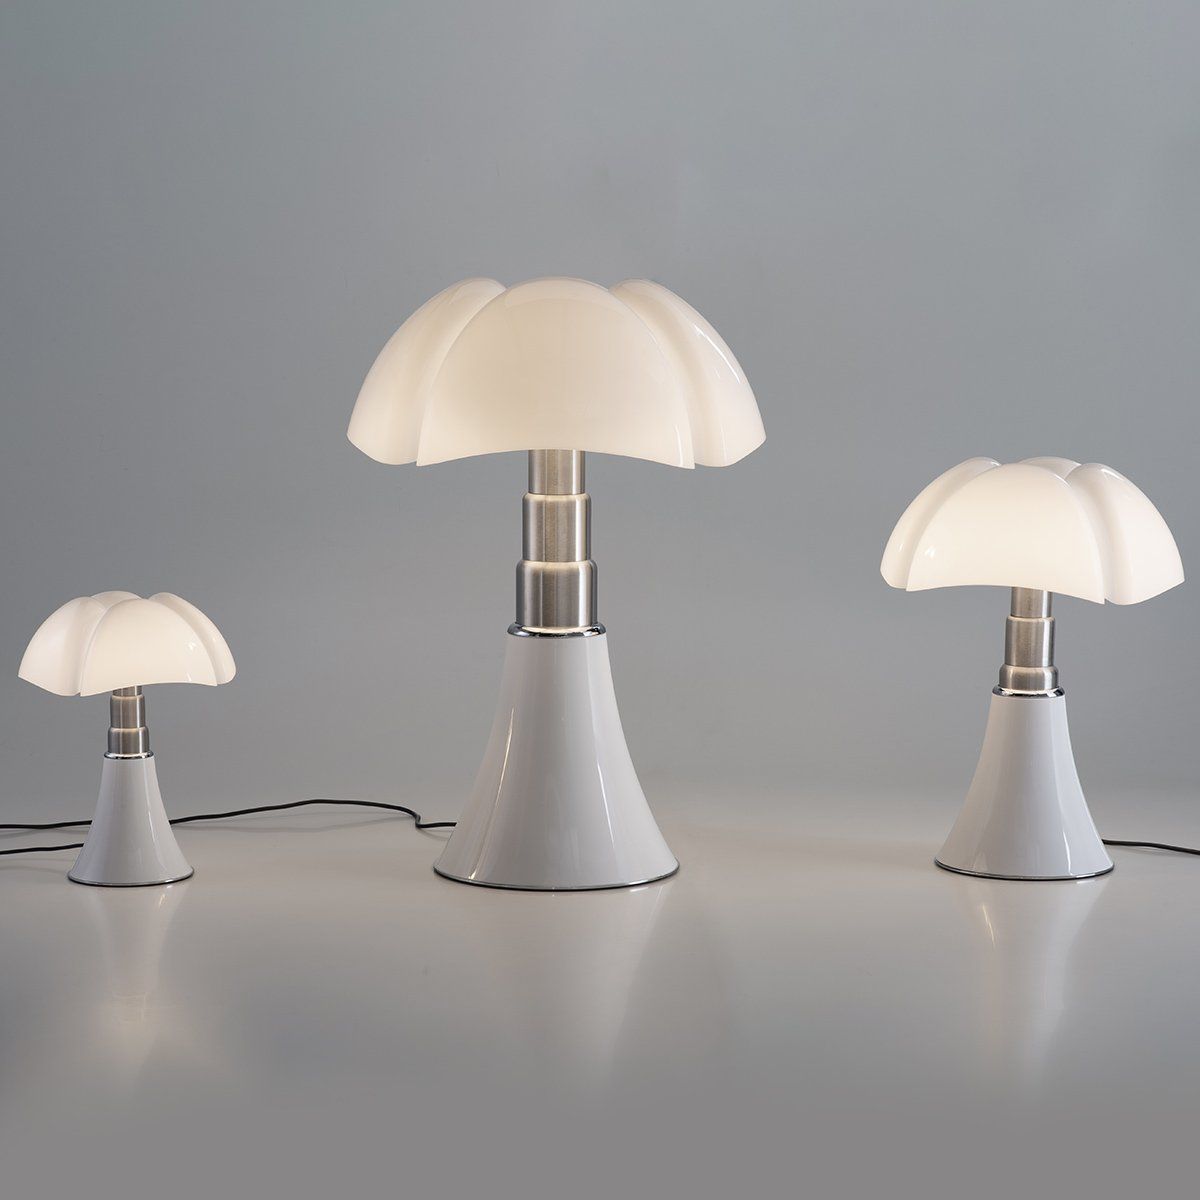 Lampe MINI PIPISTRELLO LED tactile dimmable blanche